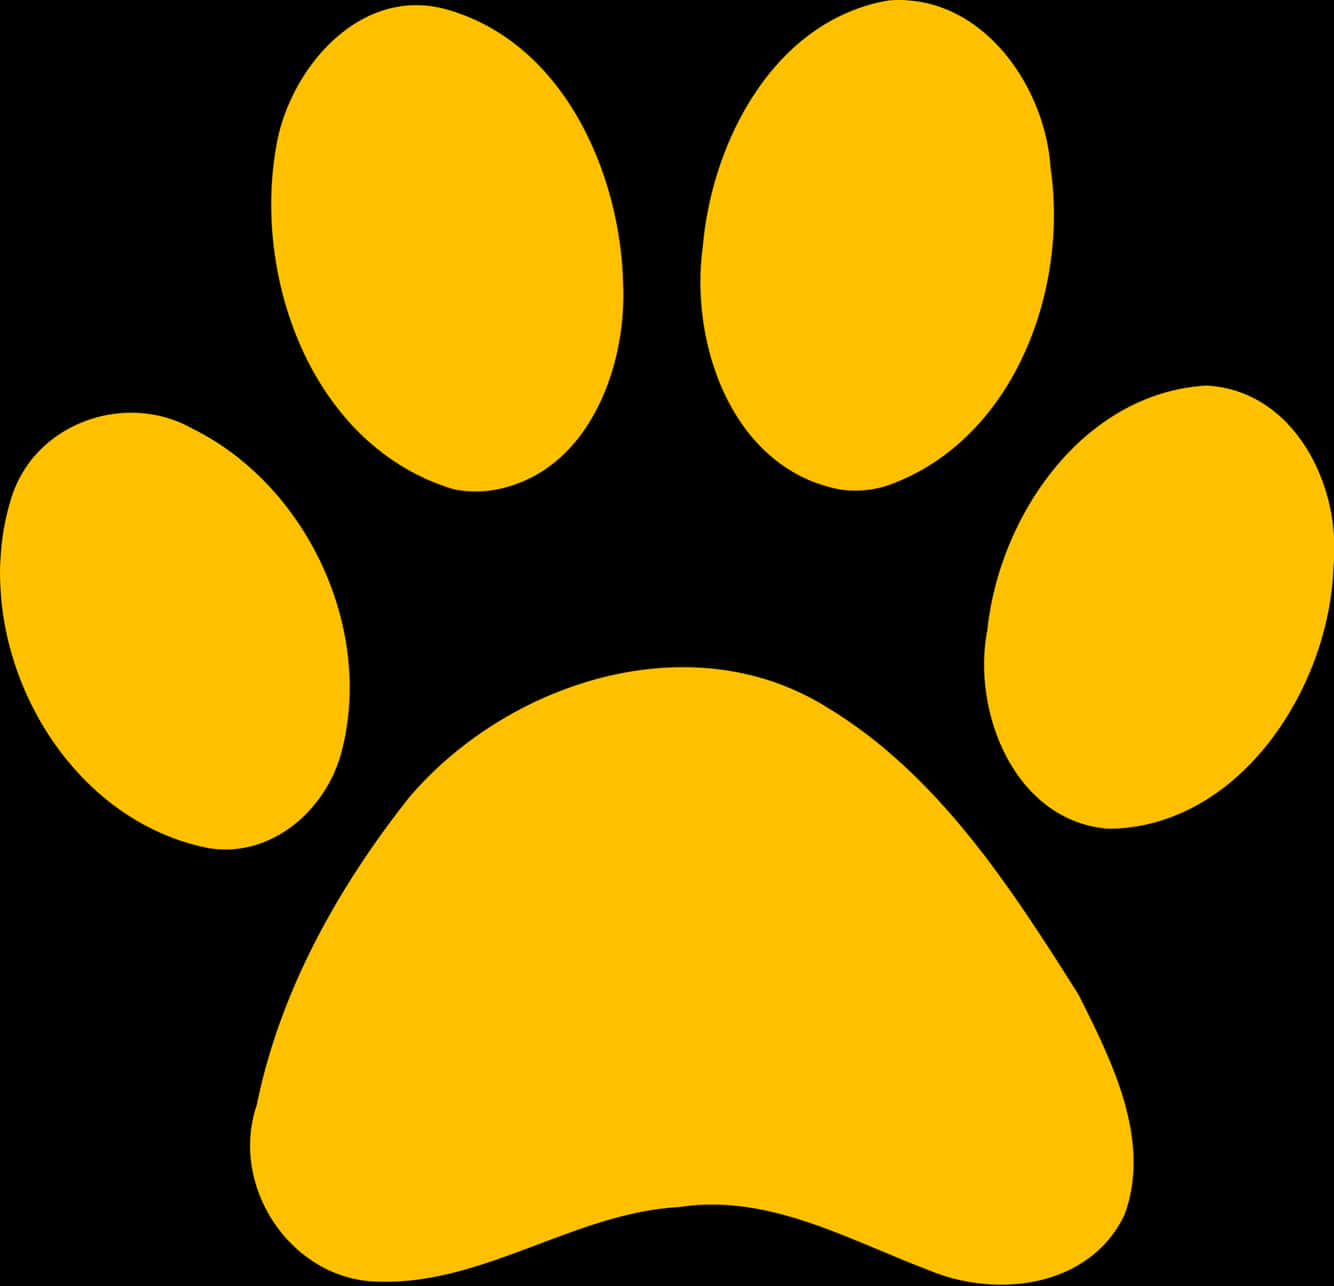 Yellow Dog Paw Print Graphic PNG image